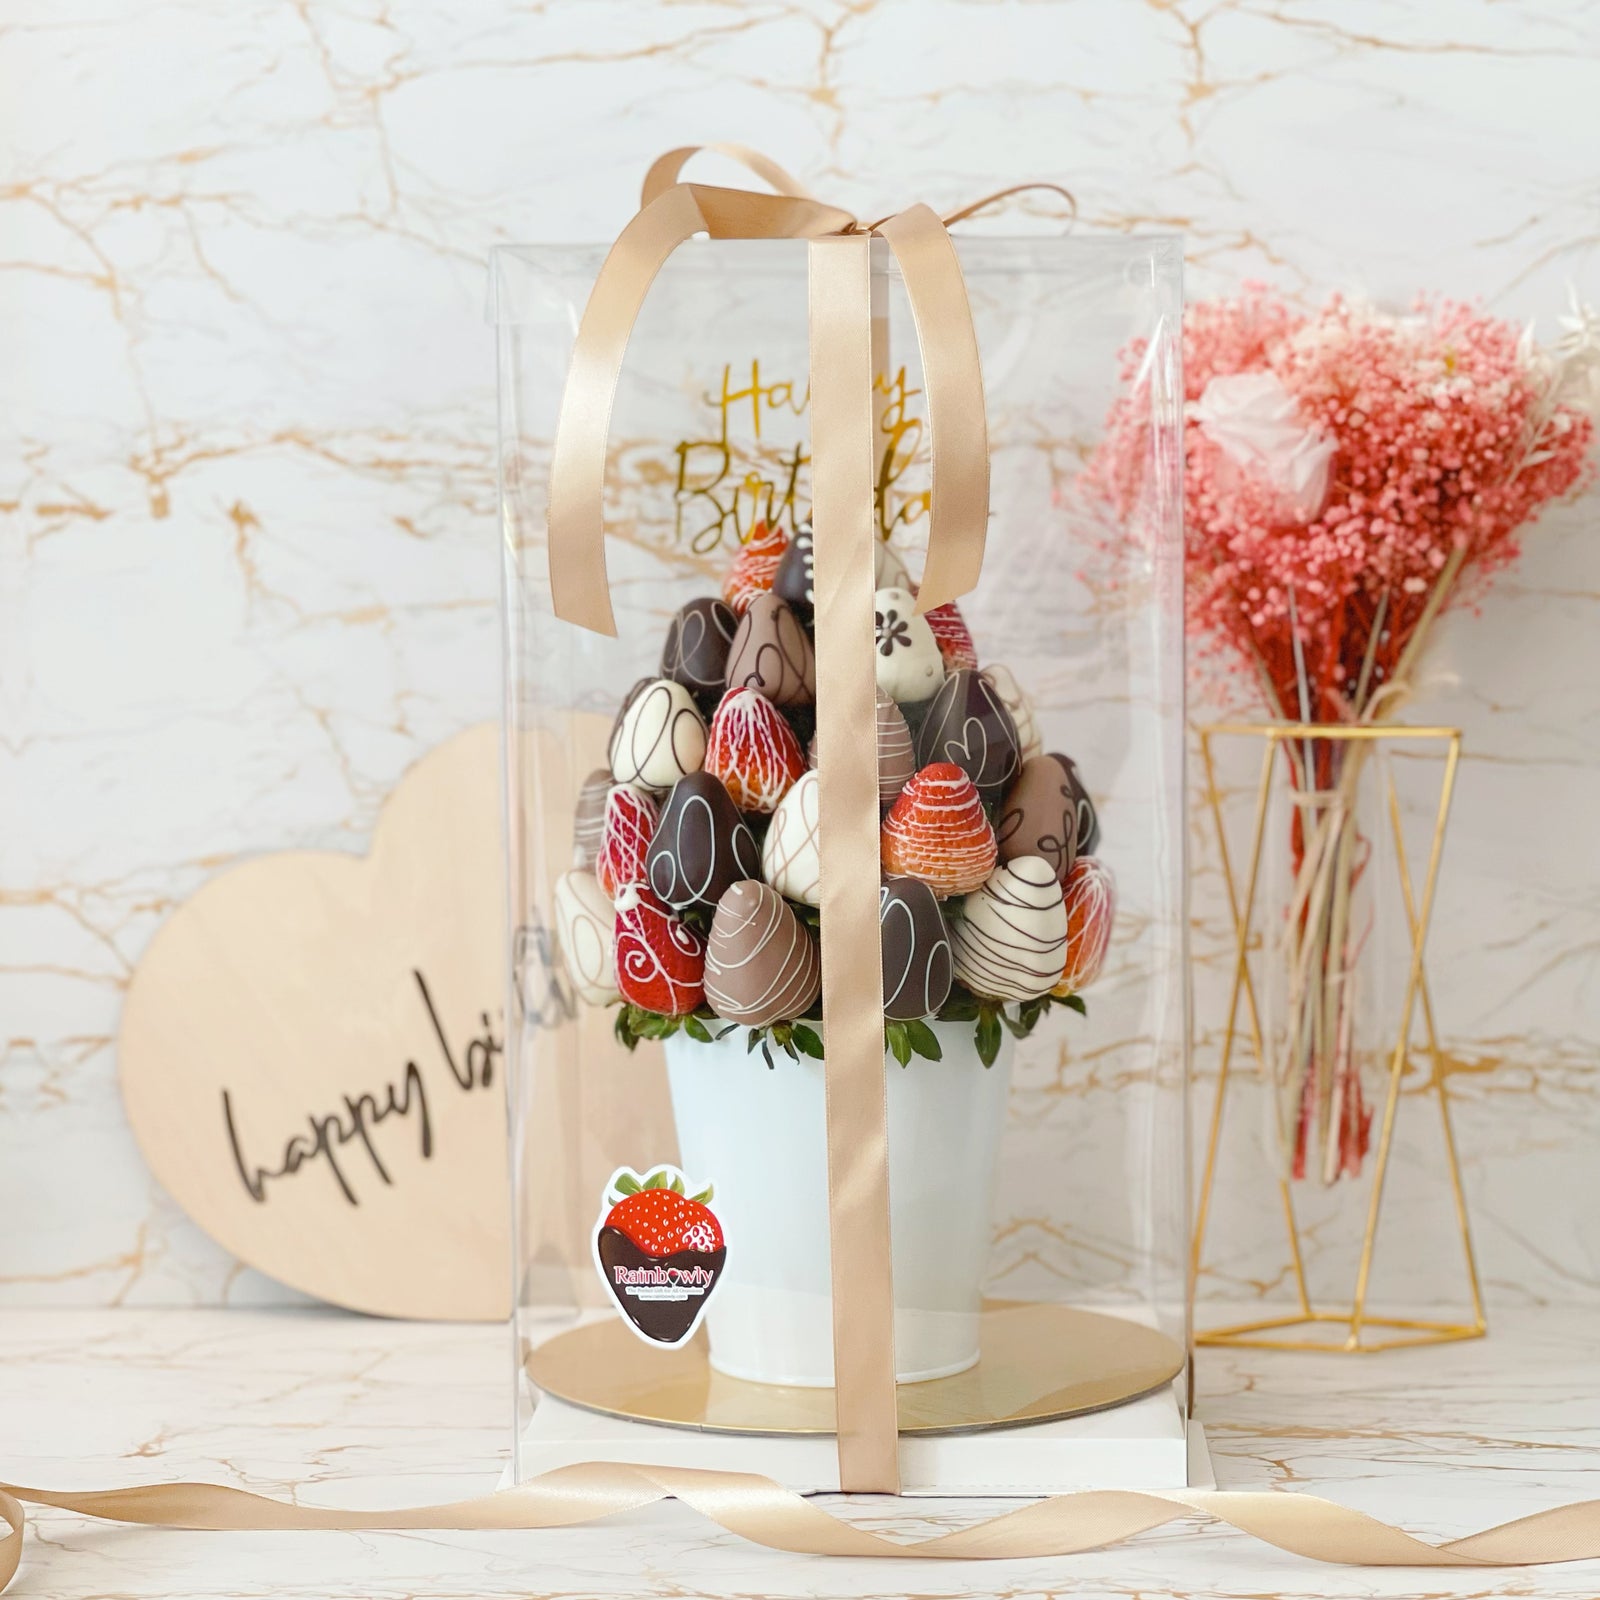 All About You - Fruit Hamper Bouquet Arrangement - Rainbowly Fresh Fruit Gift and Flower Arrangments